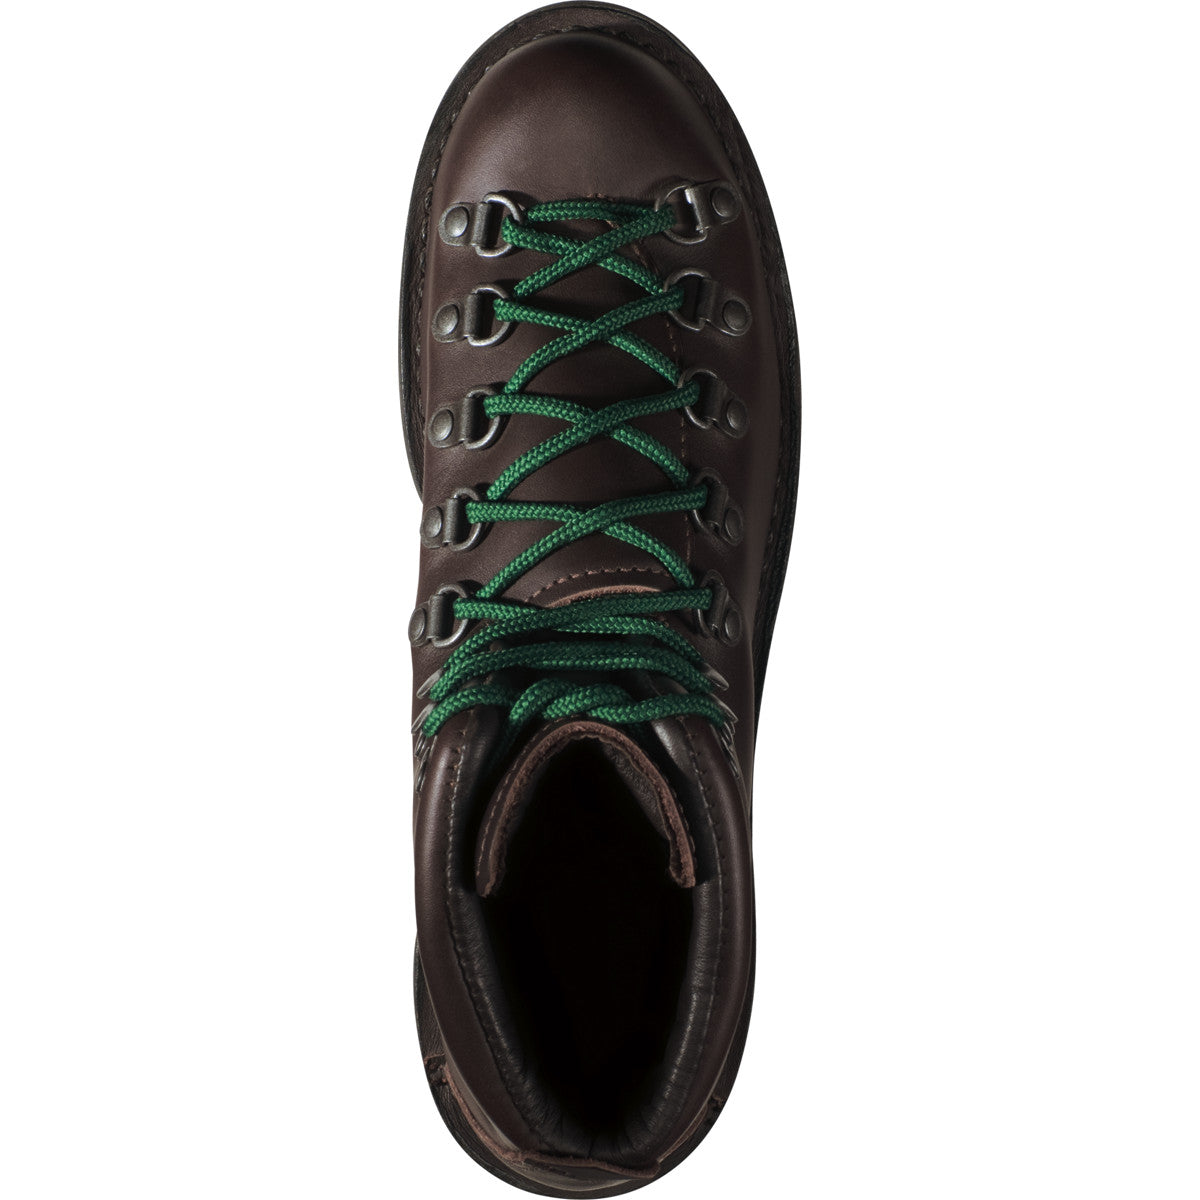 Men New Danner Mountain Light Ii Men S Hiking Boots Clothing Shoes Accessories Vishawatch Com